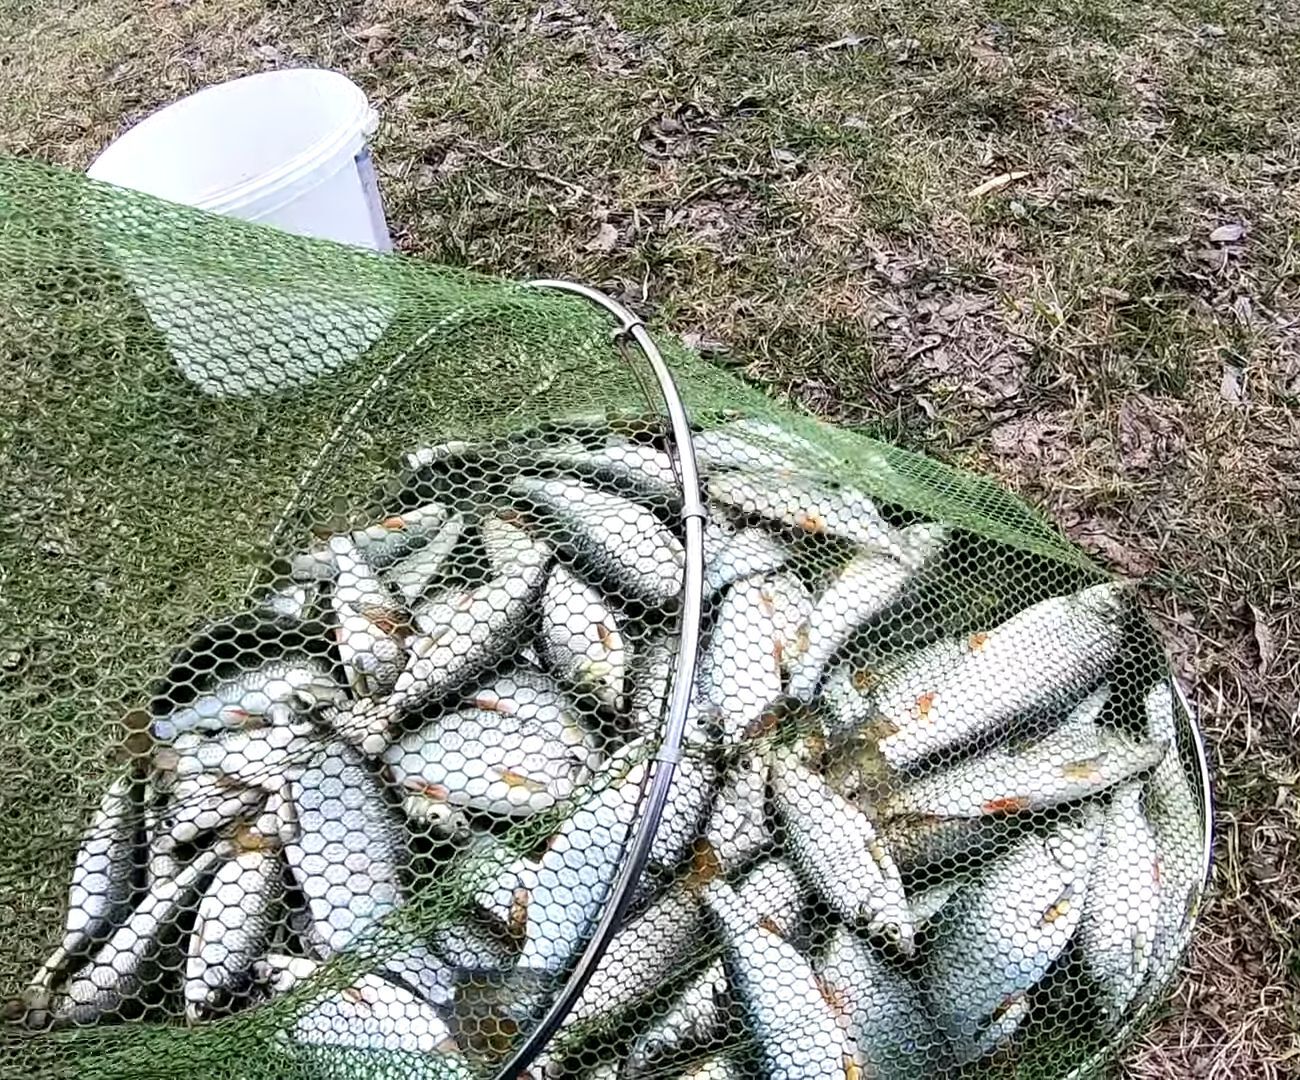 Рыбалка осенью